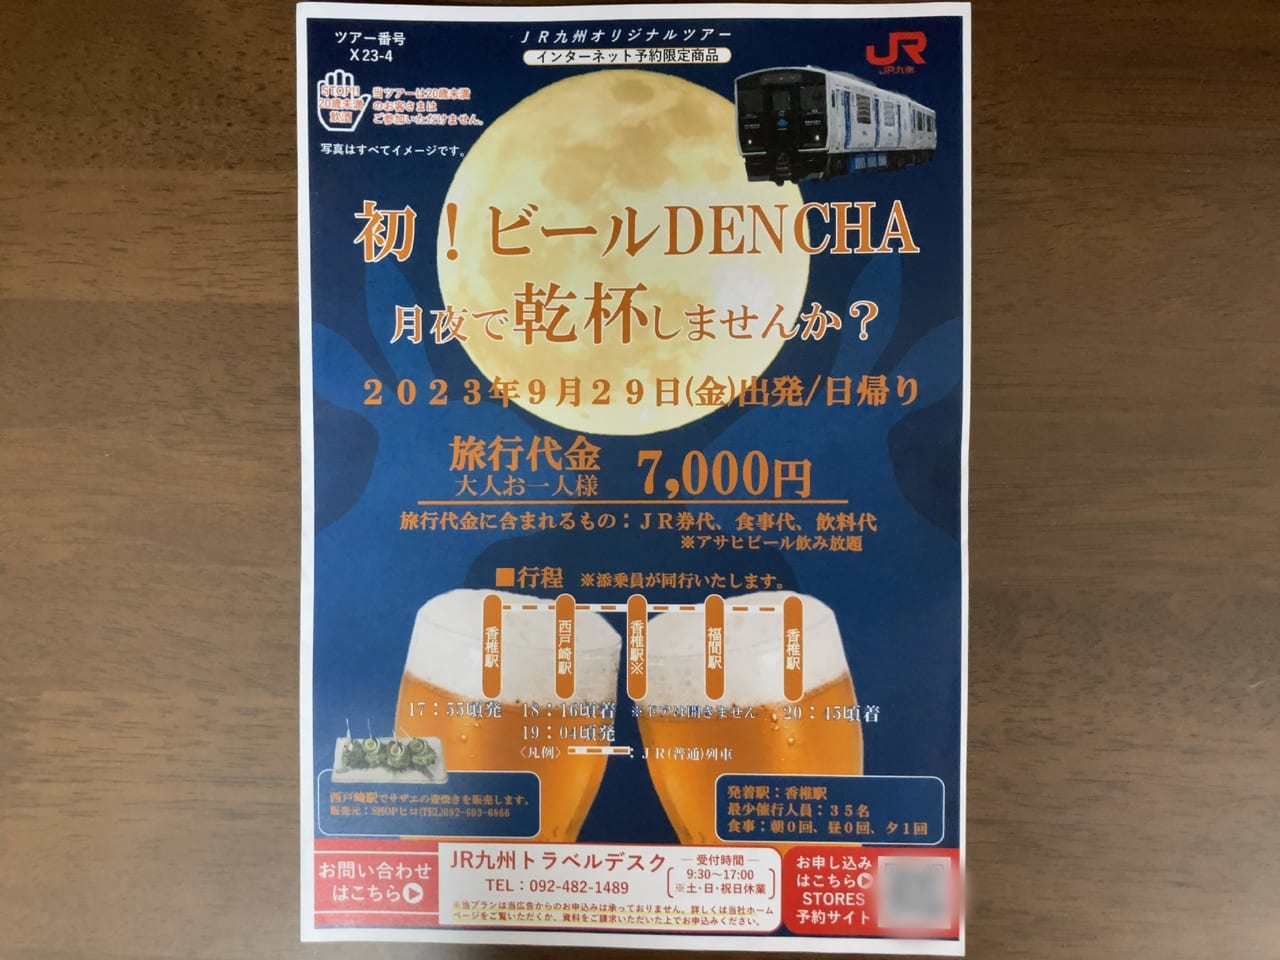 JR九州・香椎線オリジナルツアー「初！ビールDENCHA～月夜で乾杯しませんか？～」が、2023年9月29日(金)出発・日帰りで開催されます。